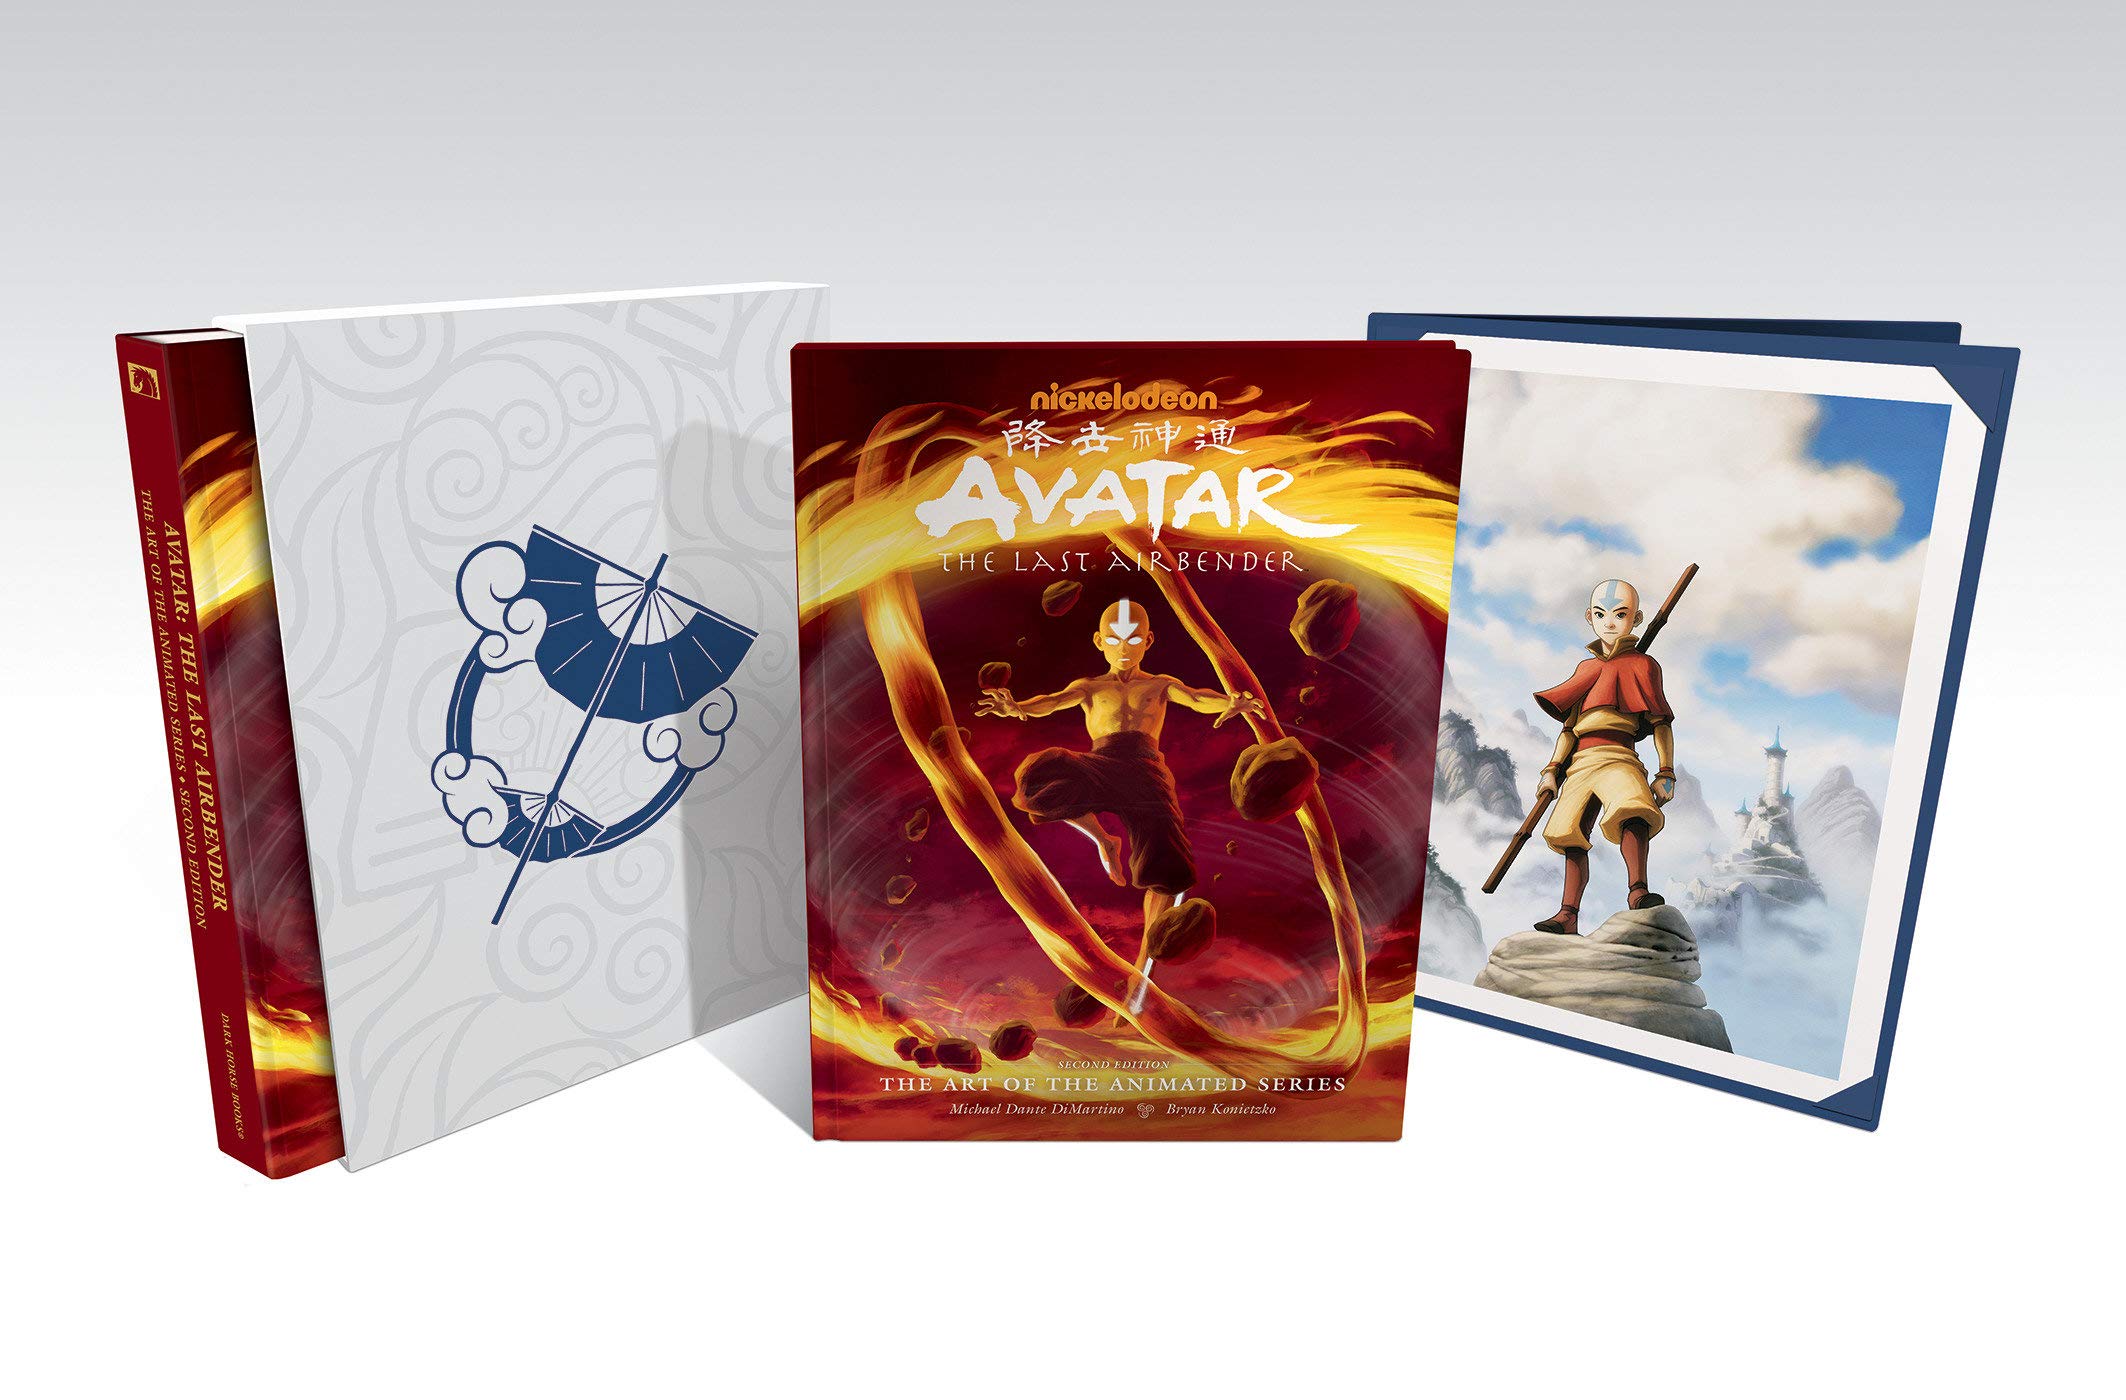 Exclusive First Look at Avatar The Last Airbender Steelbook Art